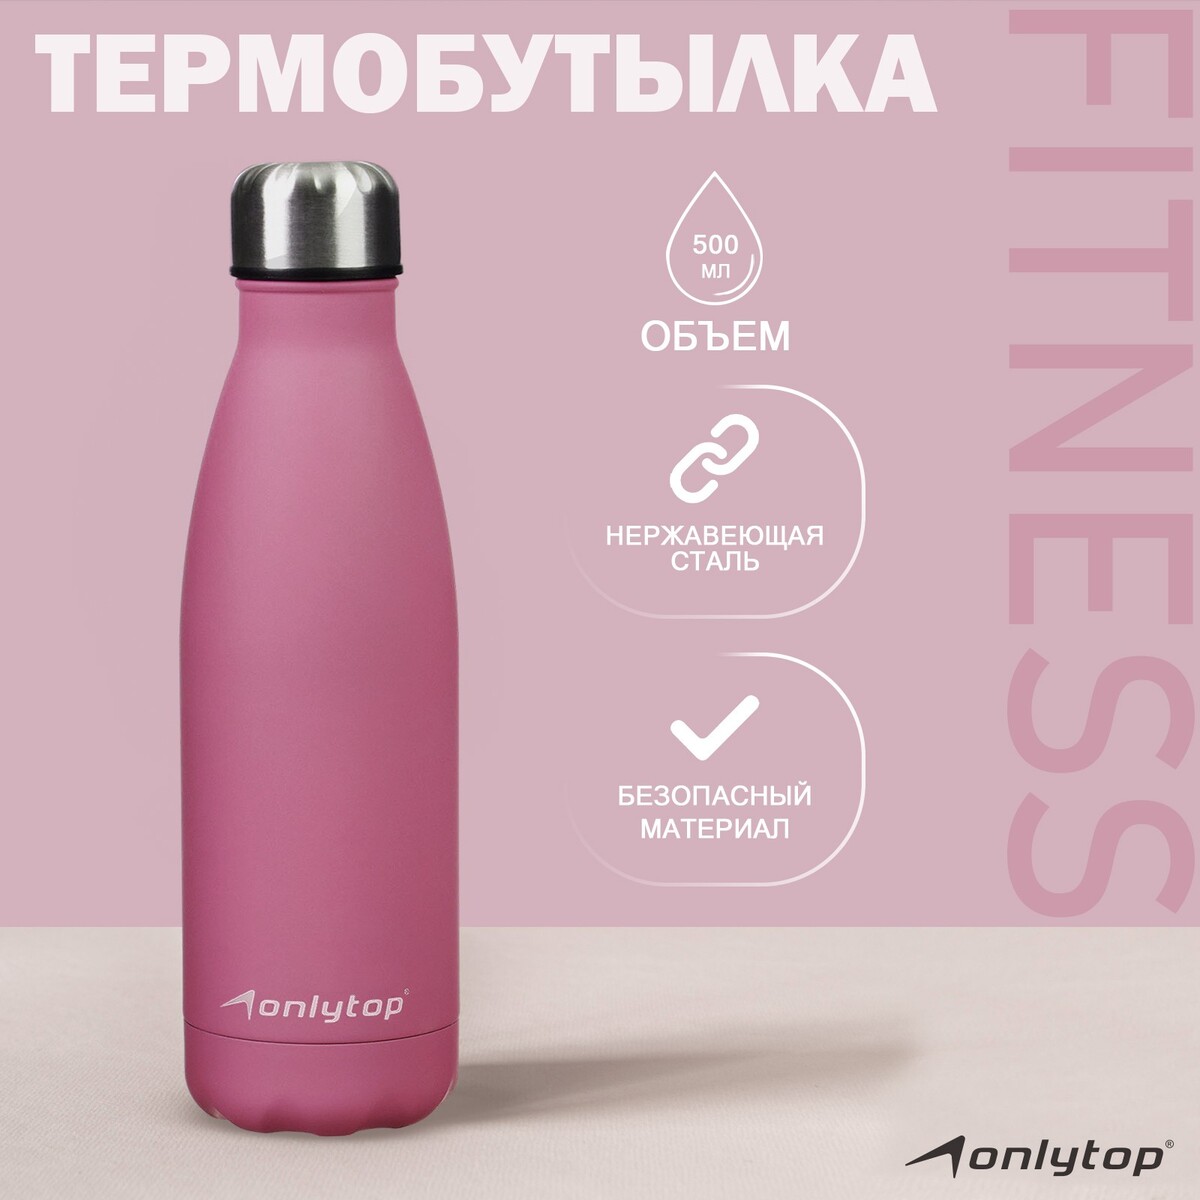 Термобутылка onlytop, 500 мл, цвет фиолетовый термобутылка для воды